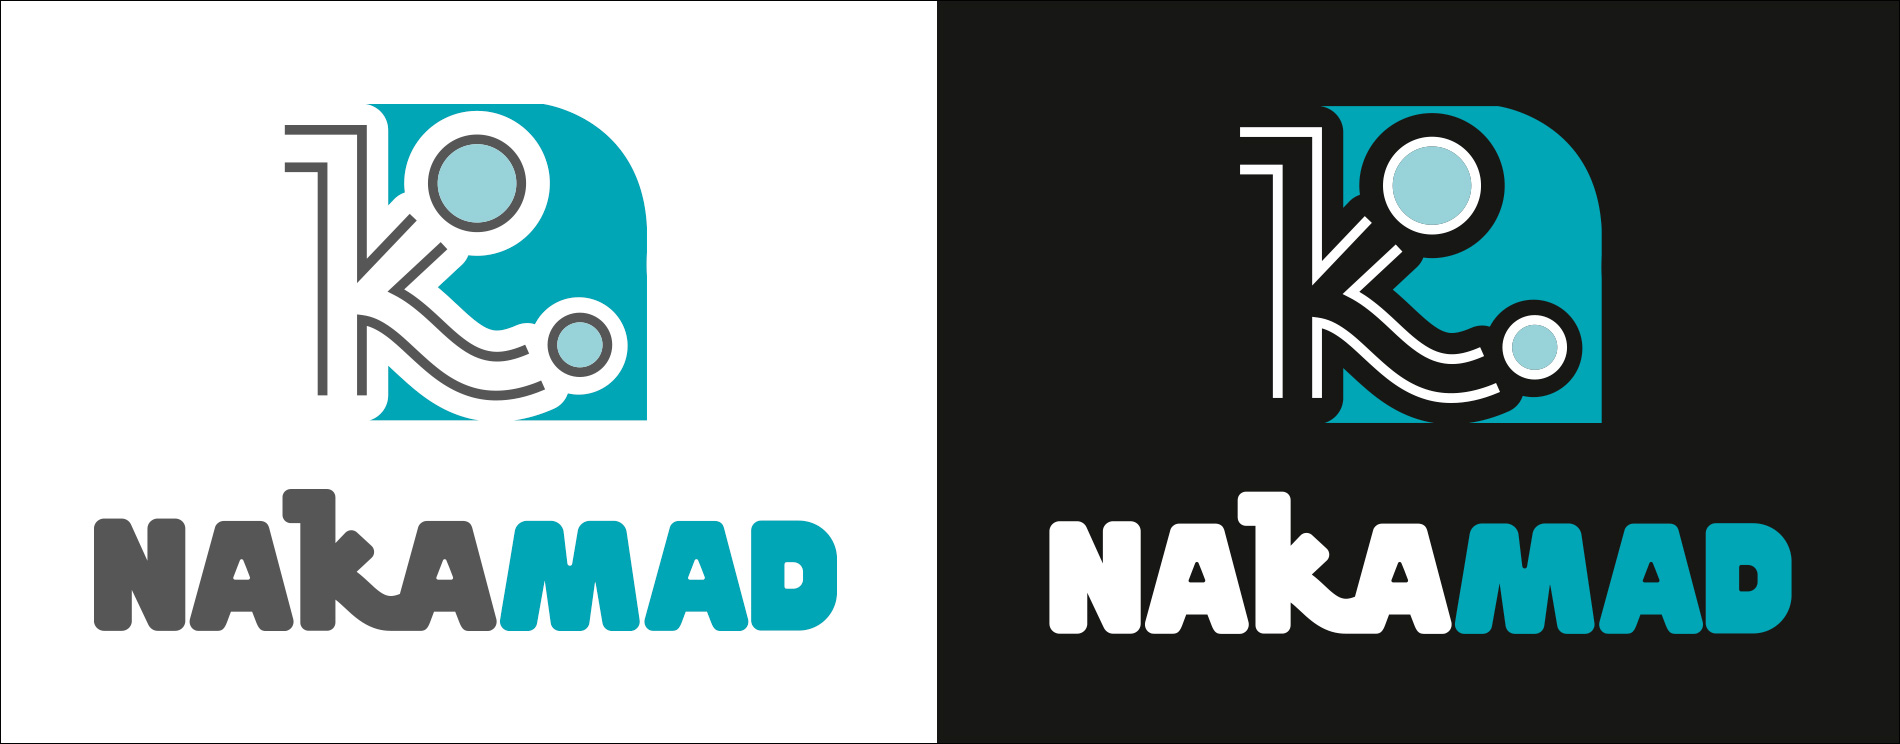 Identidad visual corporativa: Nakamad